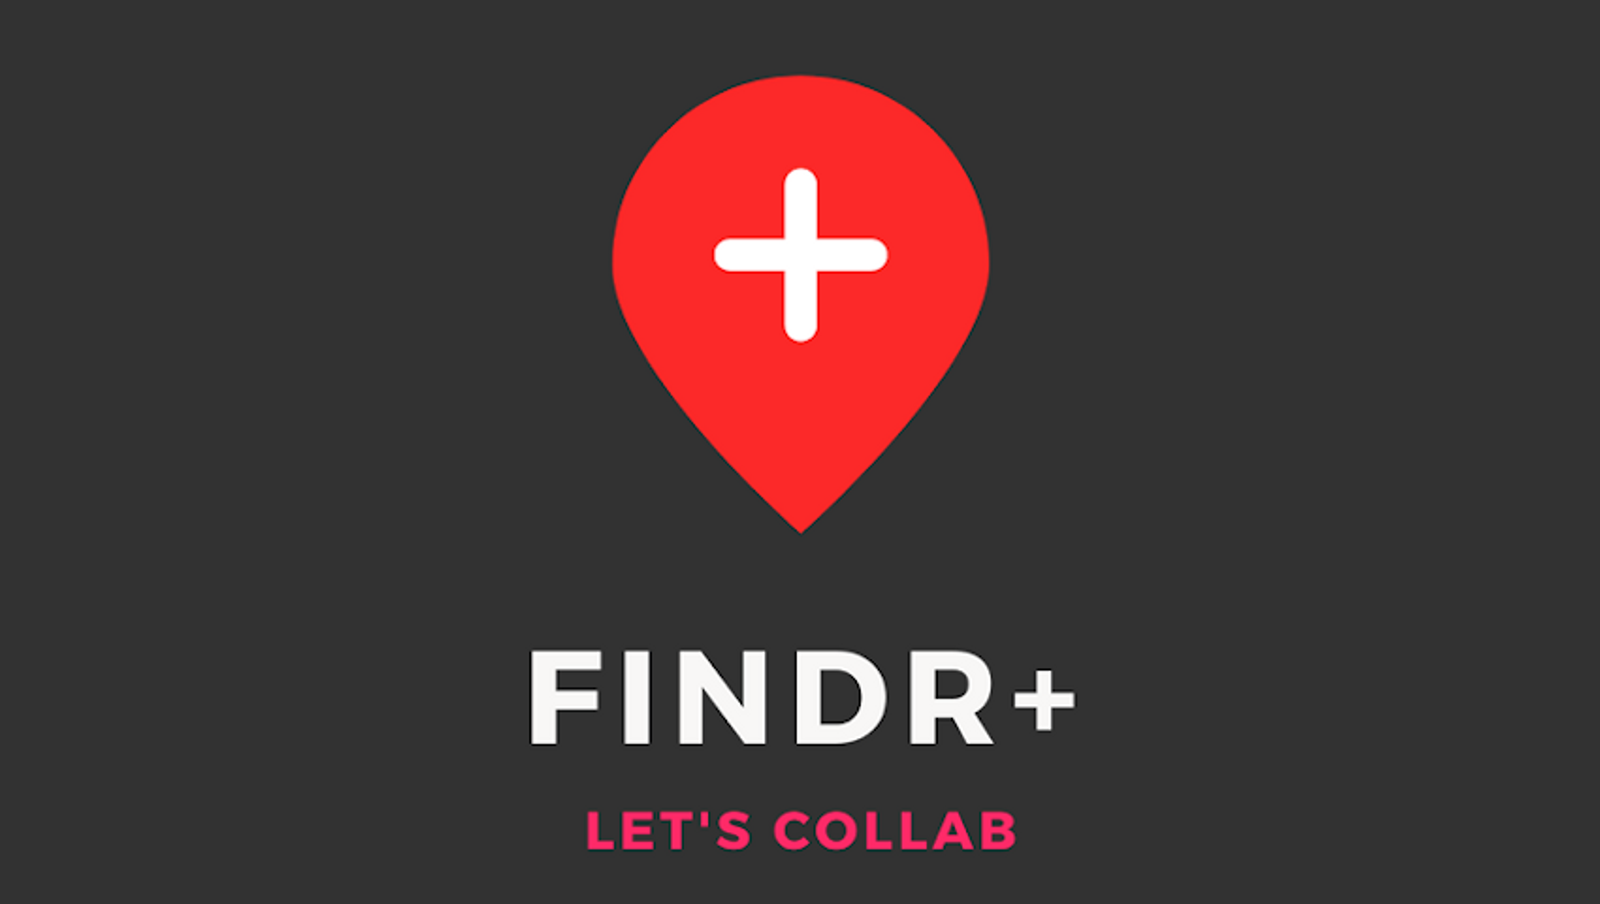 JustFor.fans Introduces Model-to-Model Business App, FINDR+